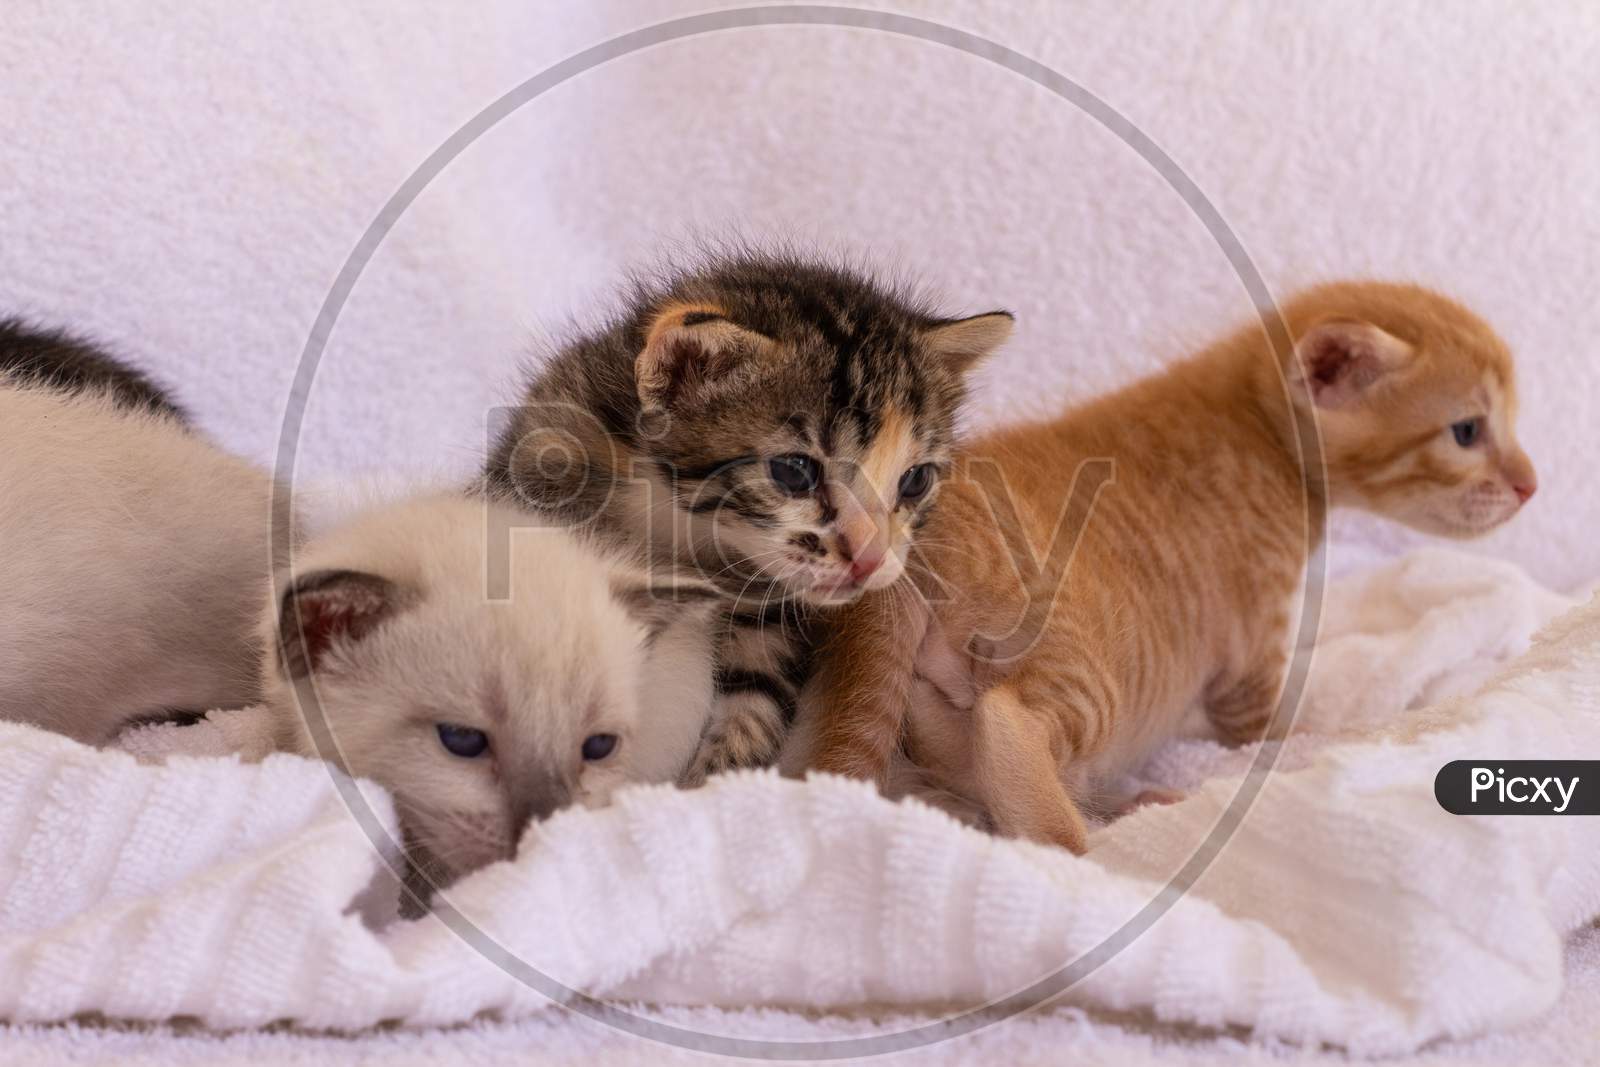 33 Best Pictures Kittens And Little Babies - The Kitten Nursery Kitten Rescue